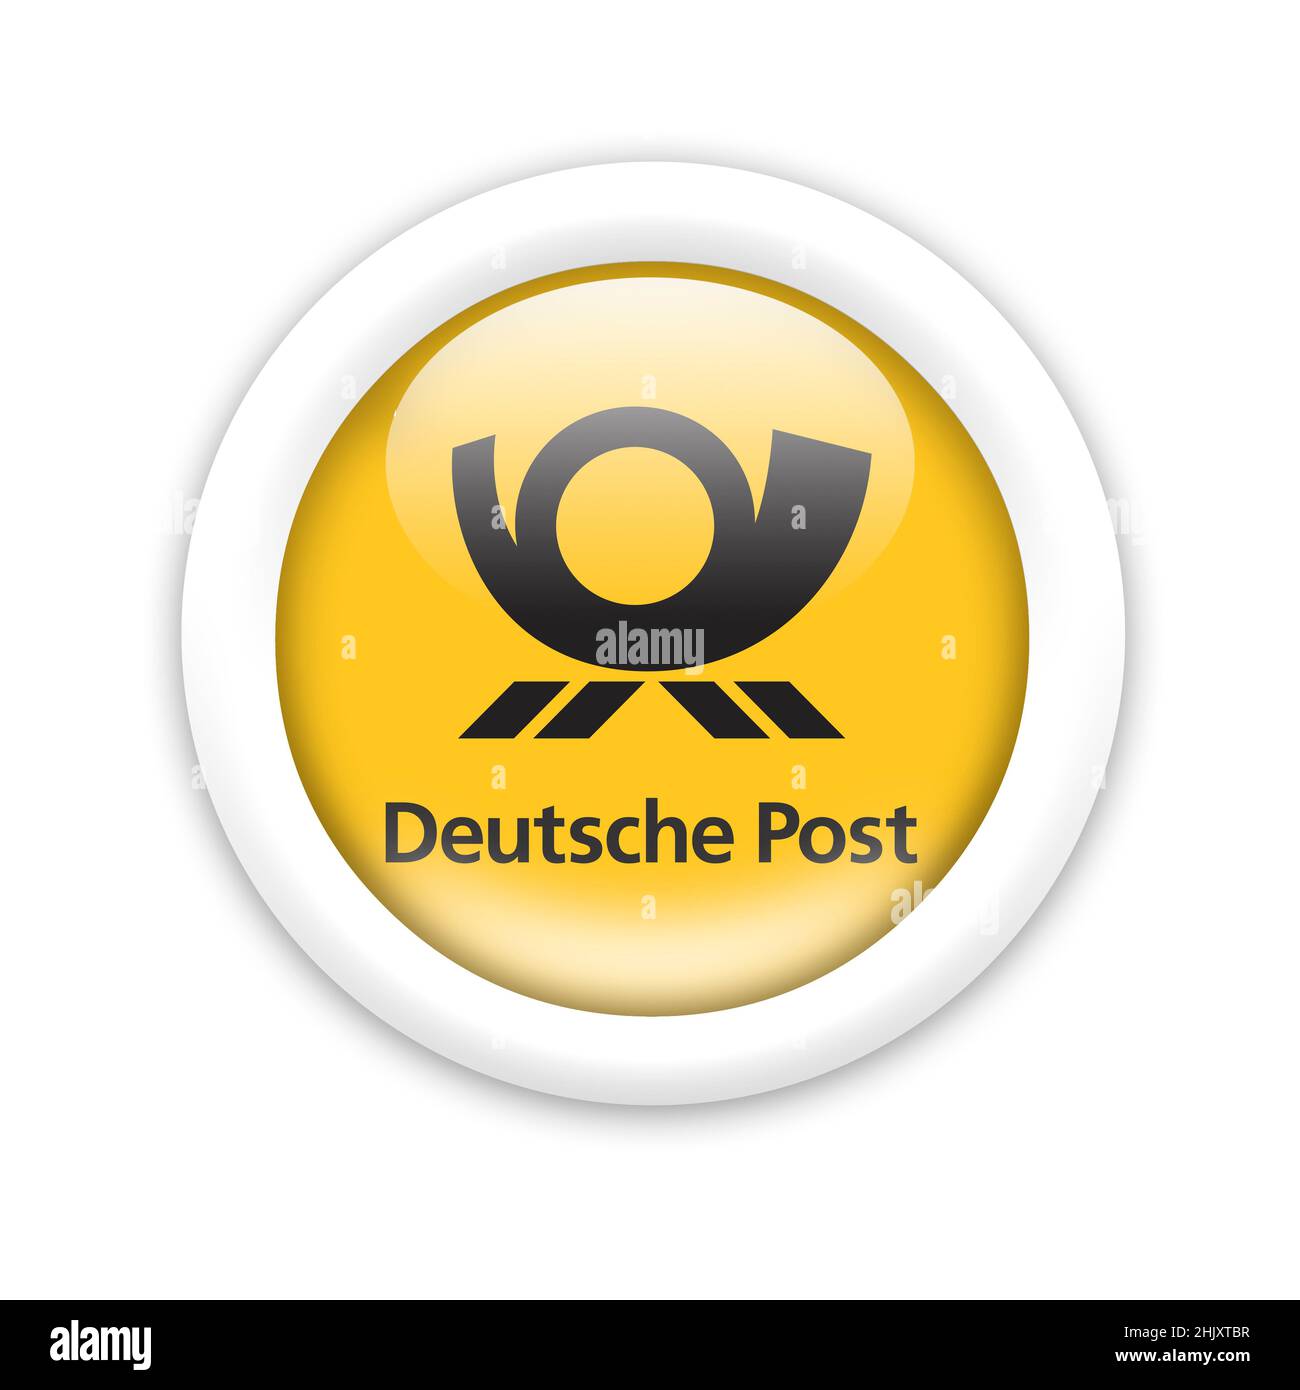 Deutsche Post logo Stock Photo - Alamy